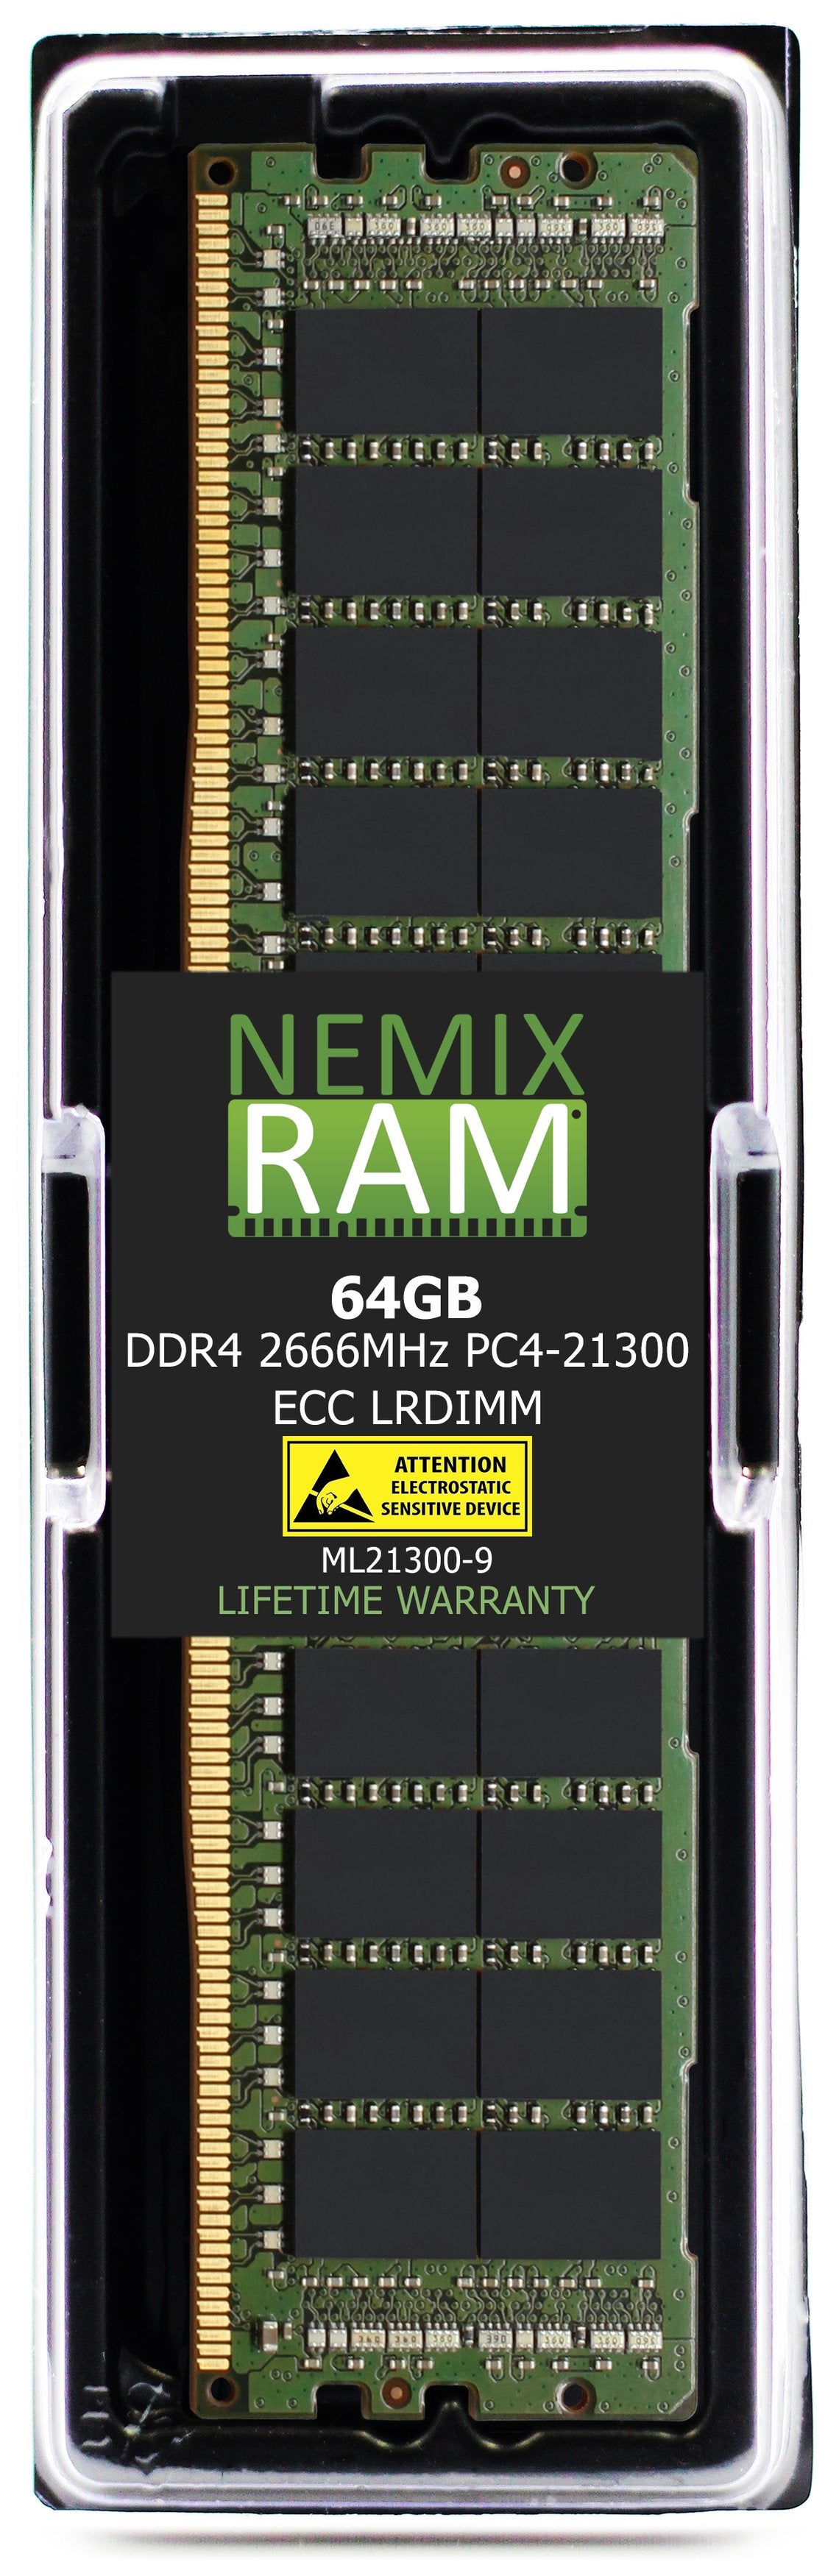 NEC Express5800 T120h Memory Module N8102-712 64GBDDR4 2666MHZ PC4-21300 LRDIMM